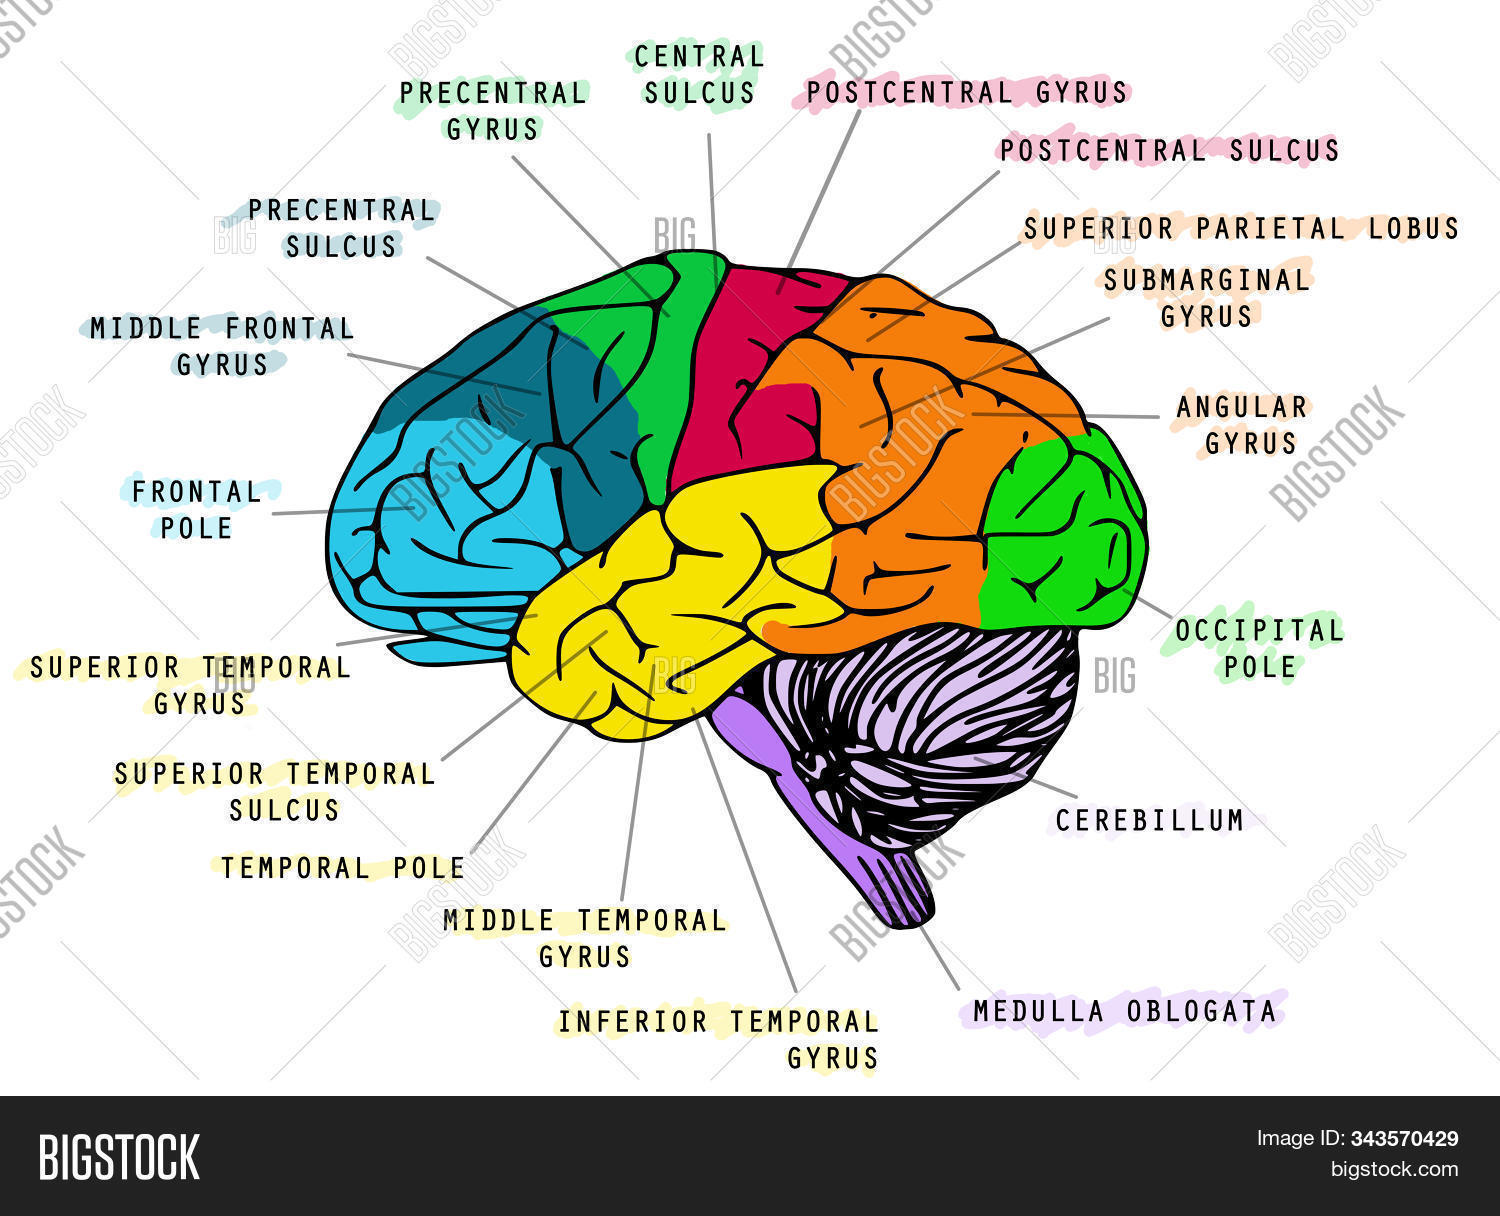 Human brains anatomy image photo free trial bigstock